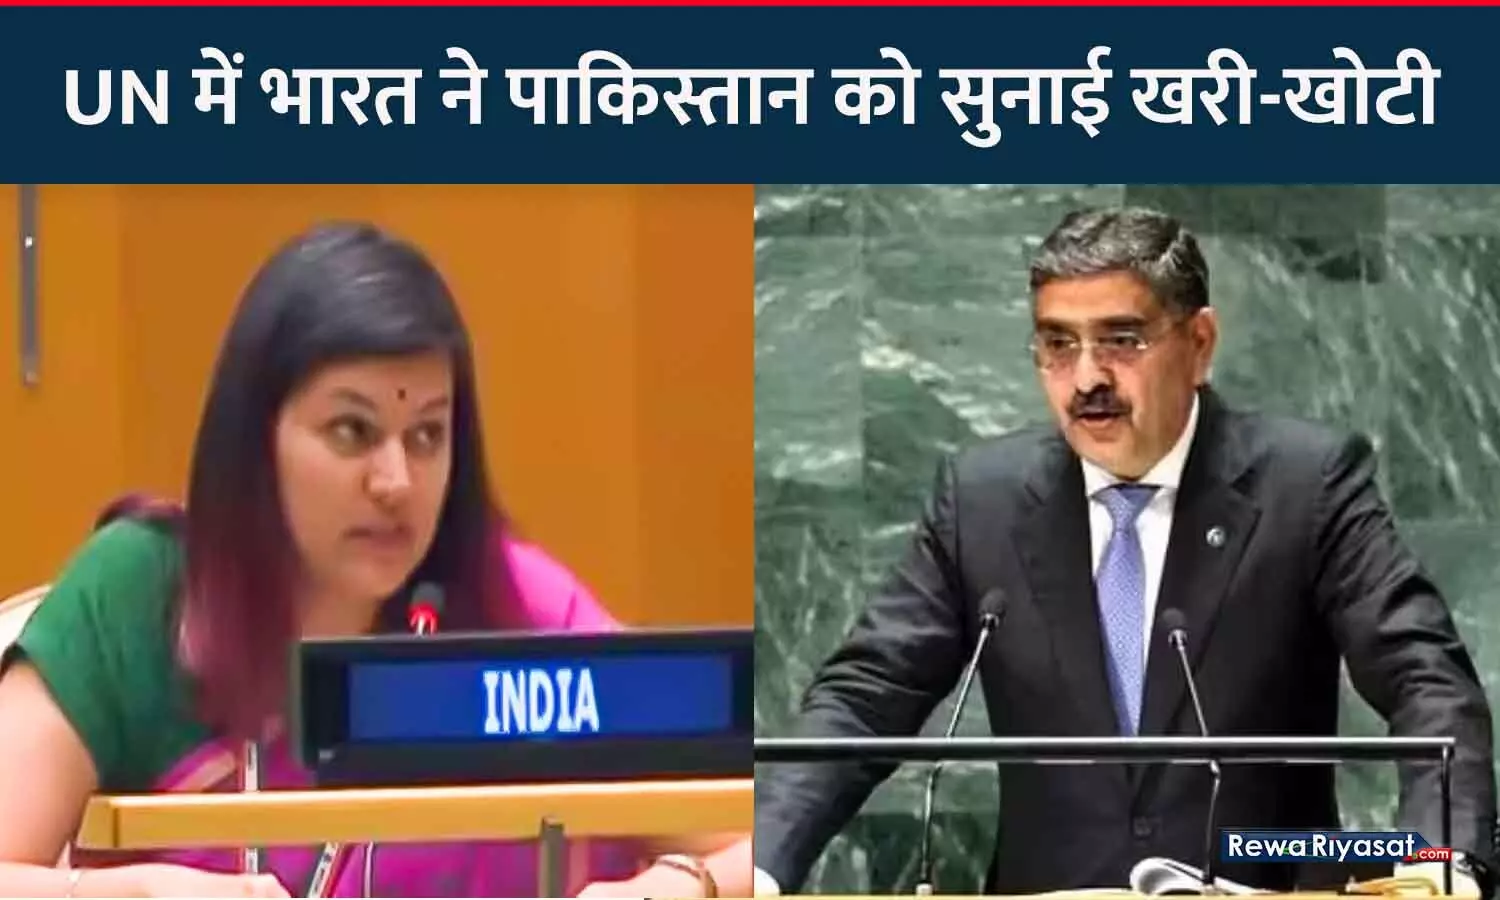 India scolded Pakistan in UN